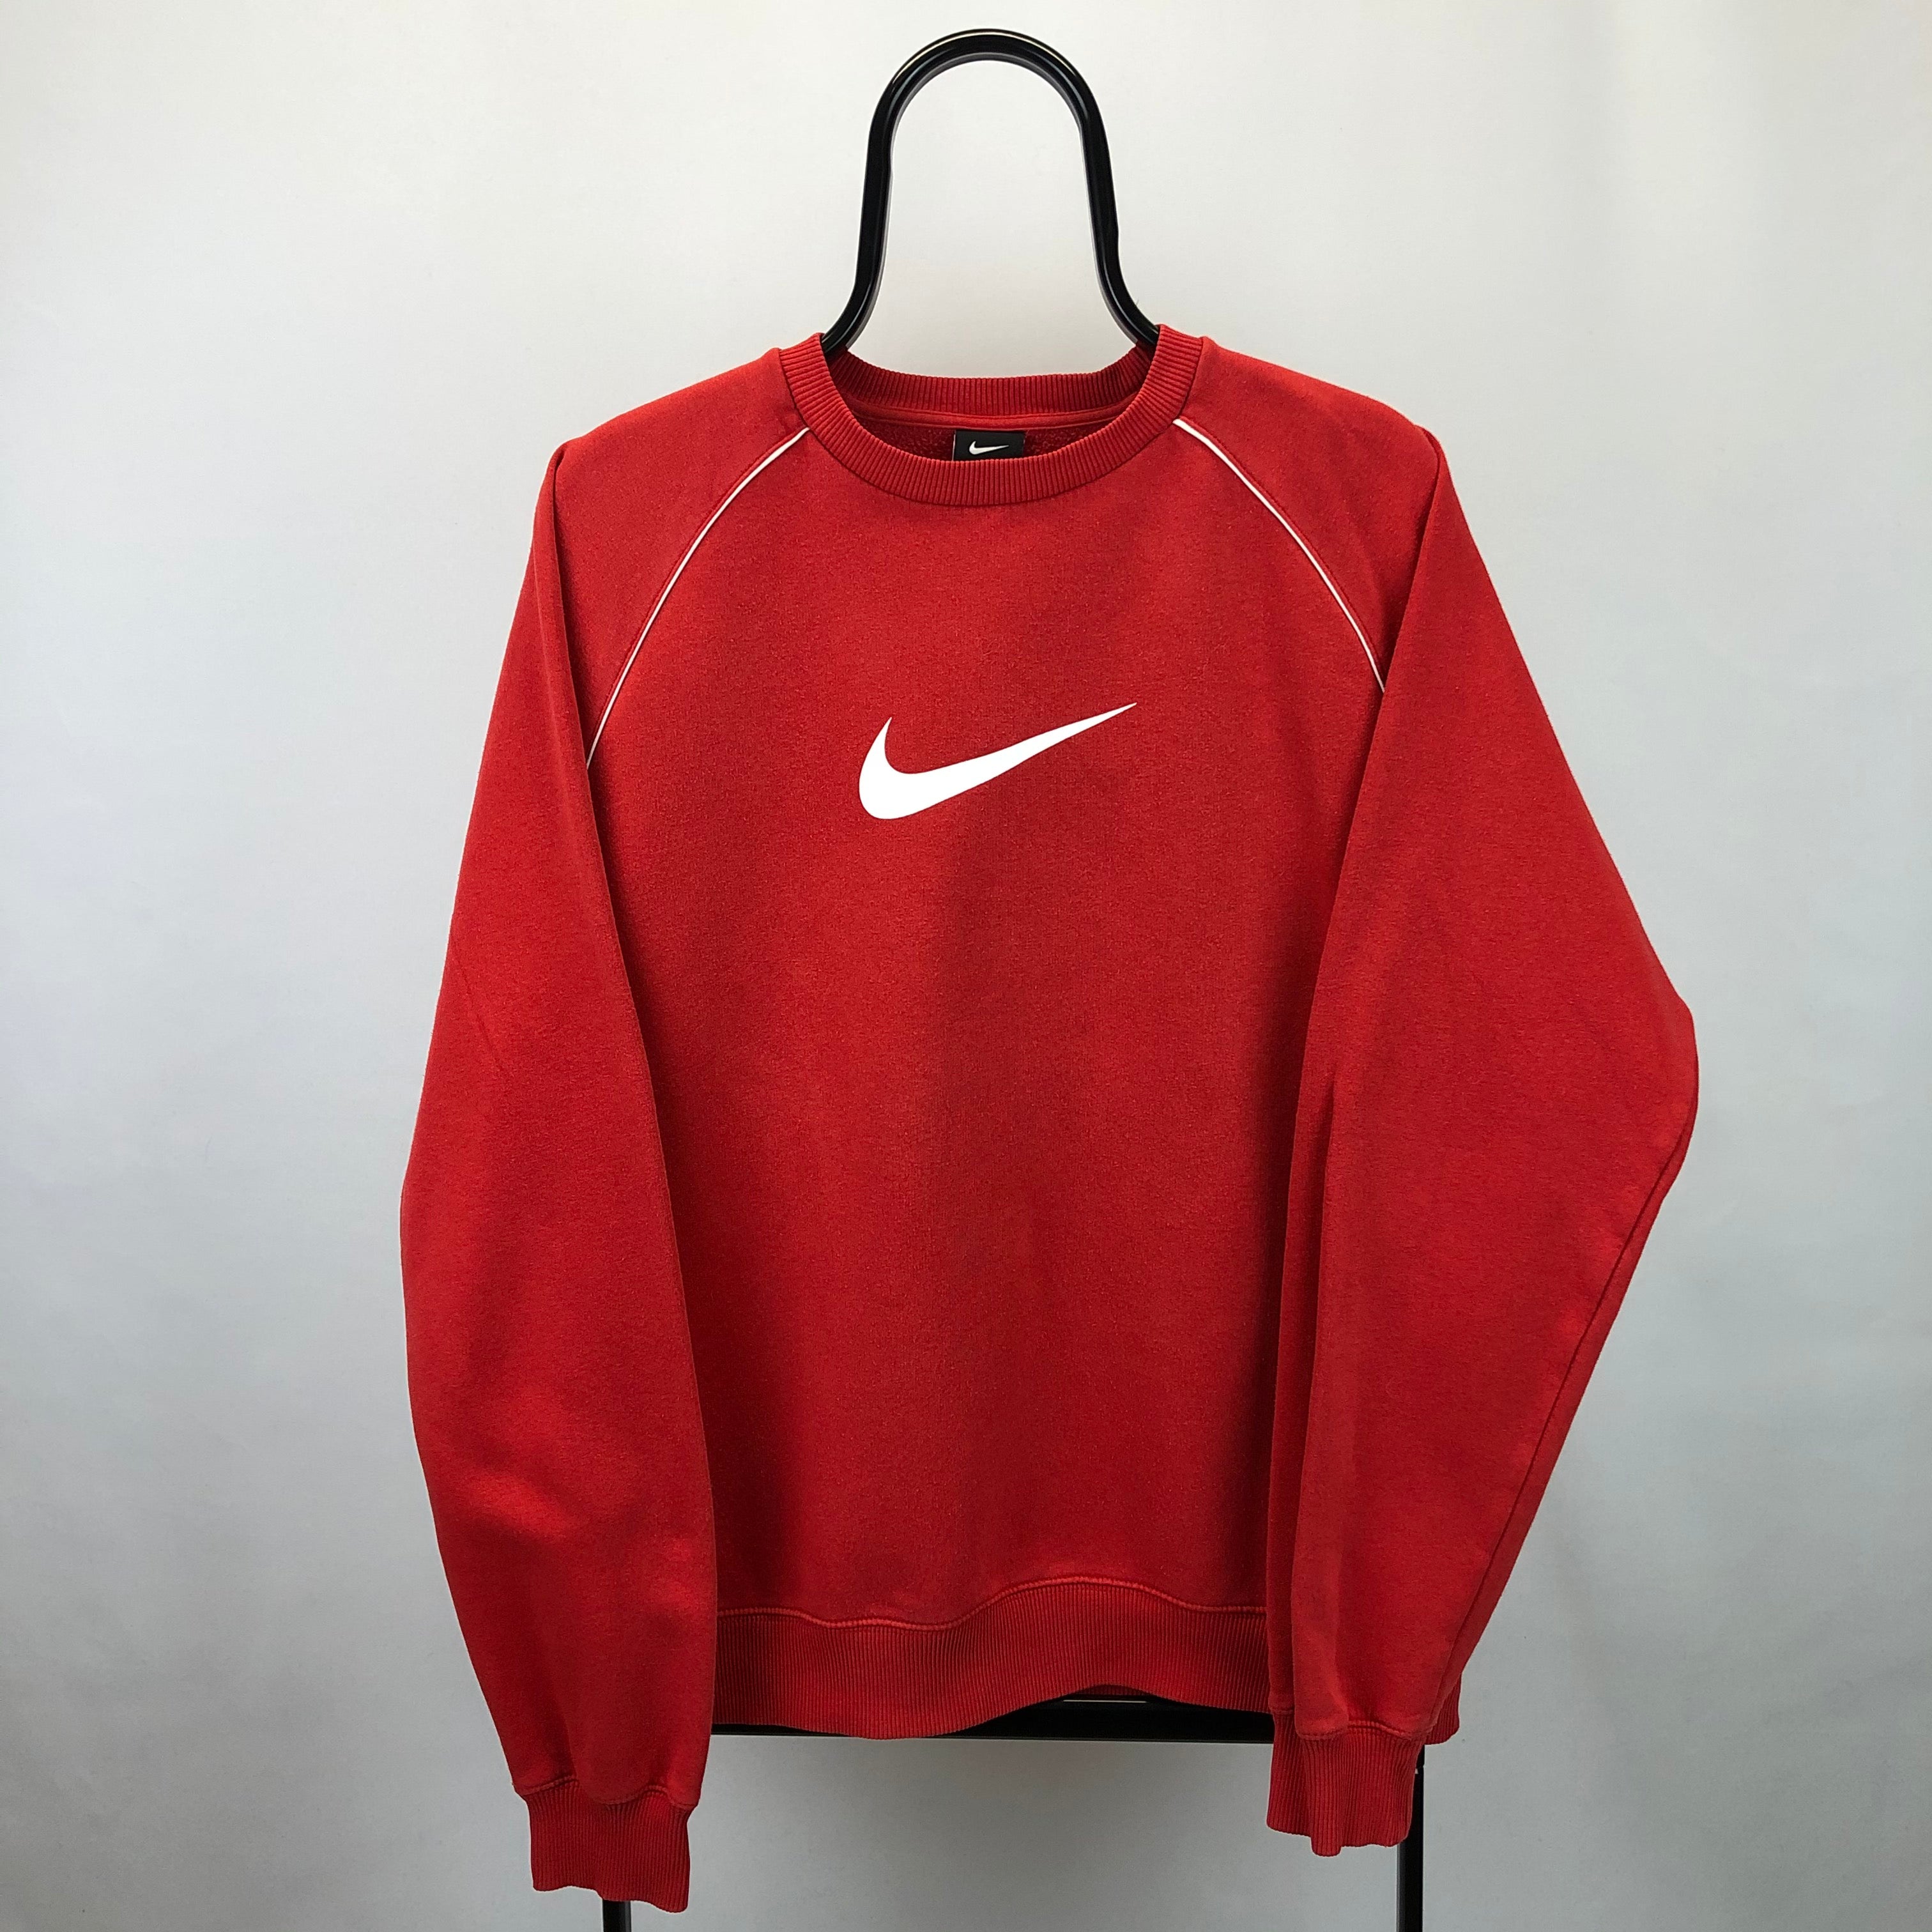 Nike Centre Swoosh Sweatshirt in Red/White - Men's Large/Women's XL ...